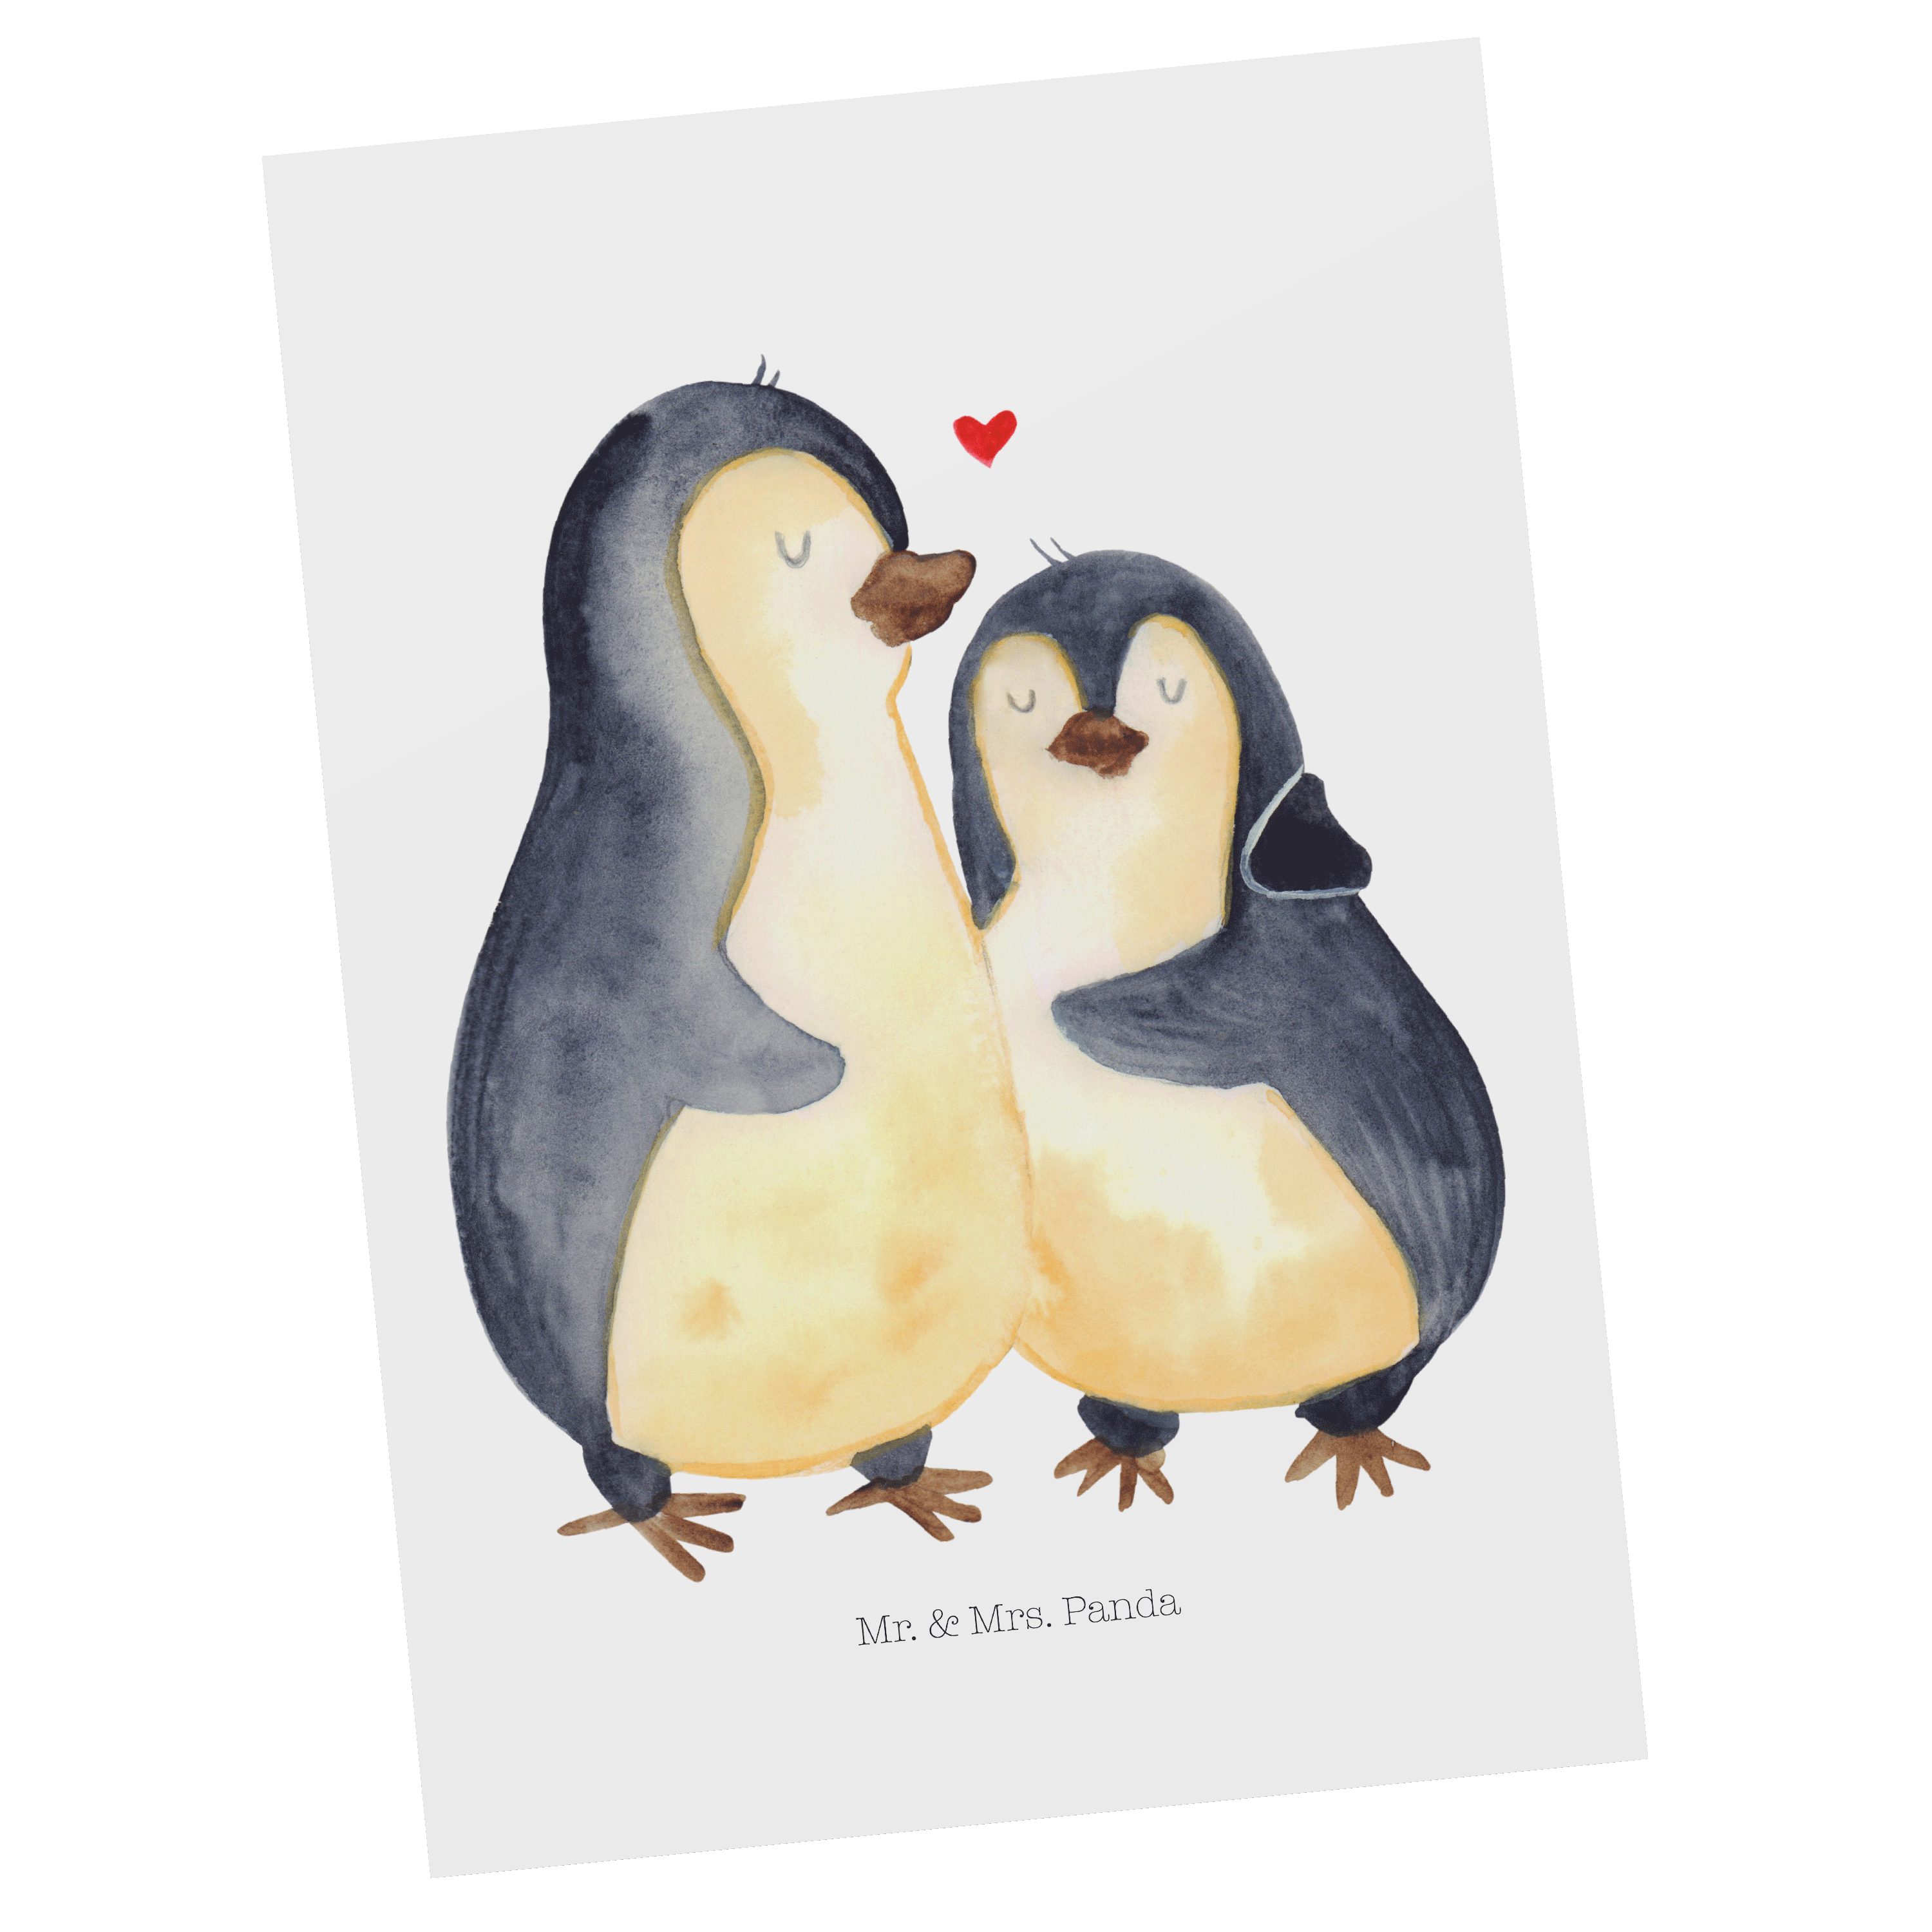 Mr. & Mrs. Panda Postkarte Pinguin umarmen - Weiß - Geschenk, Geburtstagskarte, Karte, Einladung, Matt Rückseite